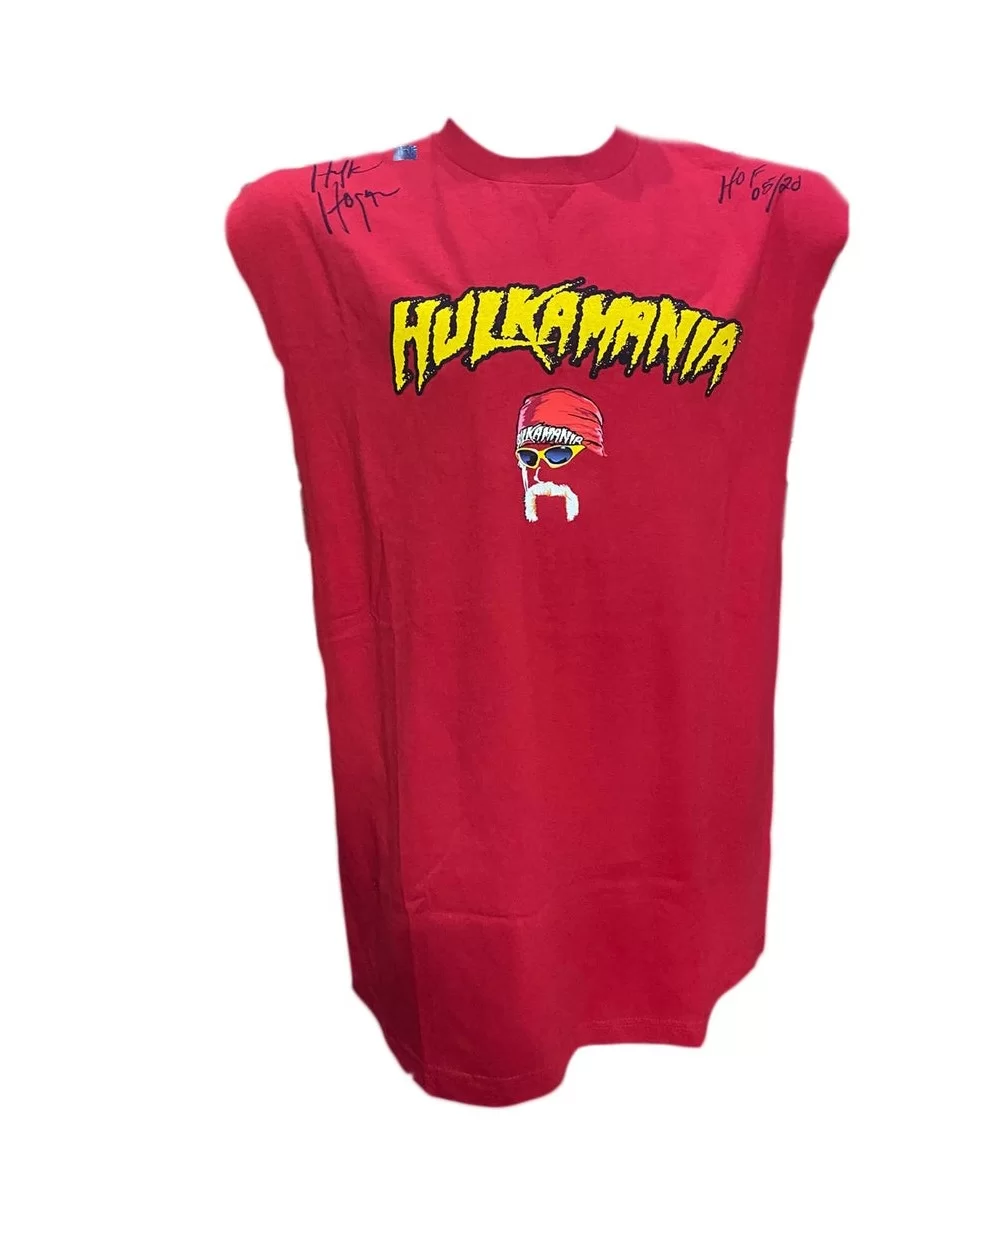 Hulkamania face Signed tear off T-shirt $206.40 Signed Items